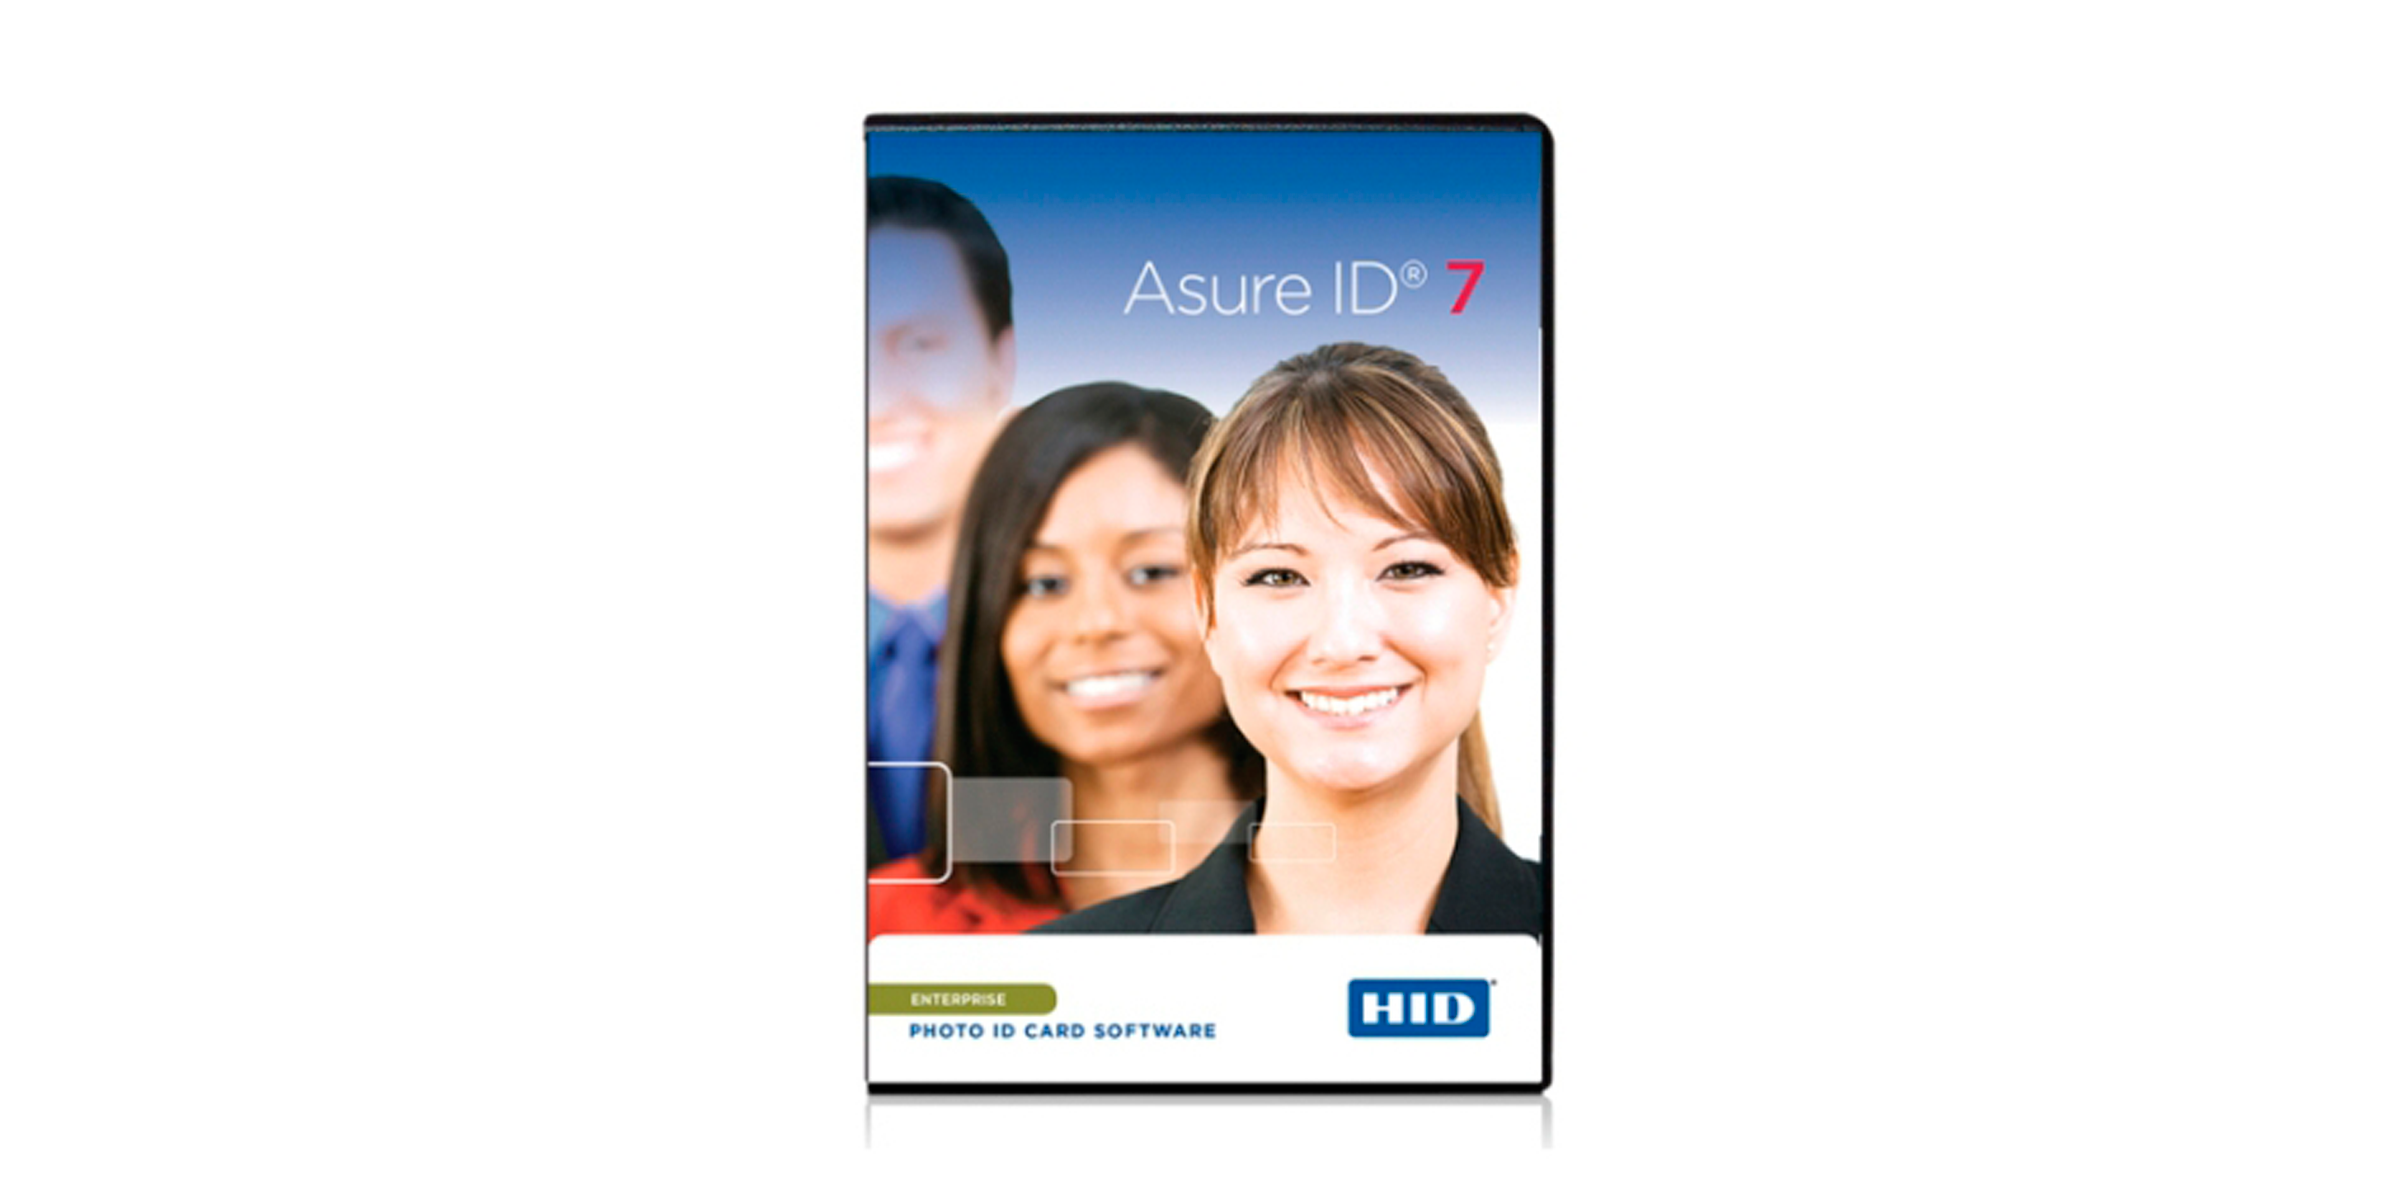 Program Asure ID7 - program do drukowania kart